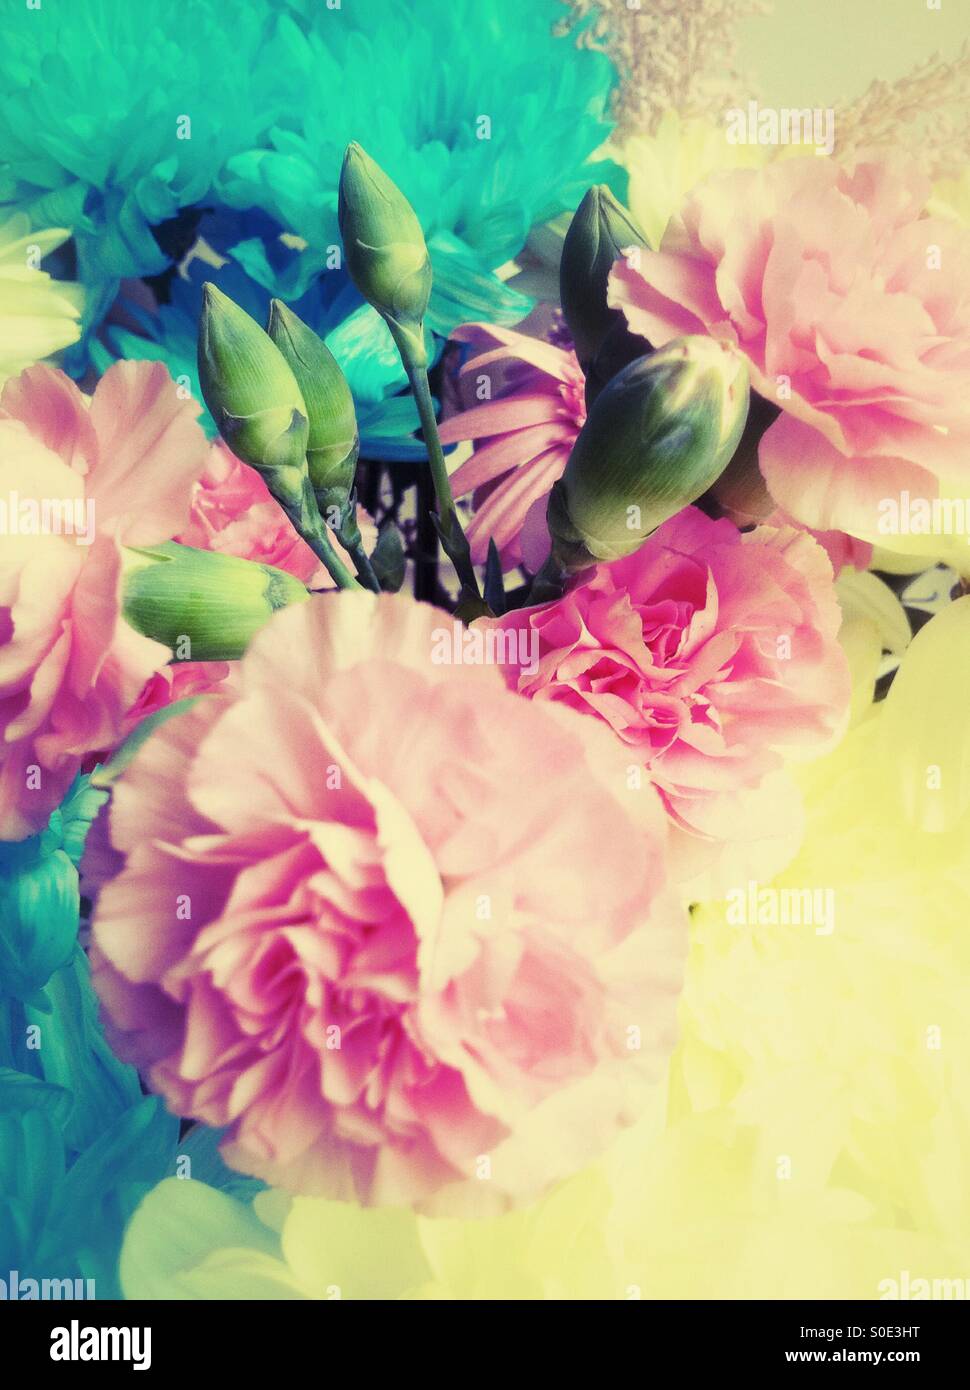 Rosa Nelke Blumen und Knospen Stockfoto